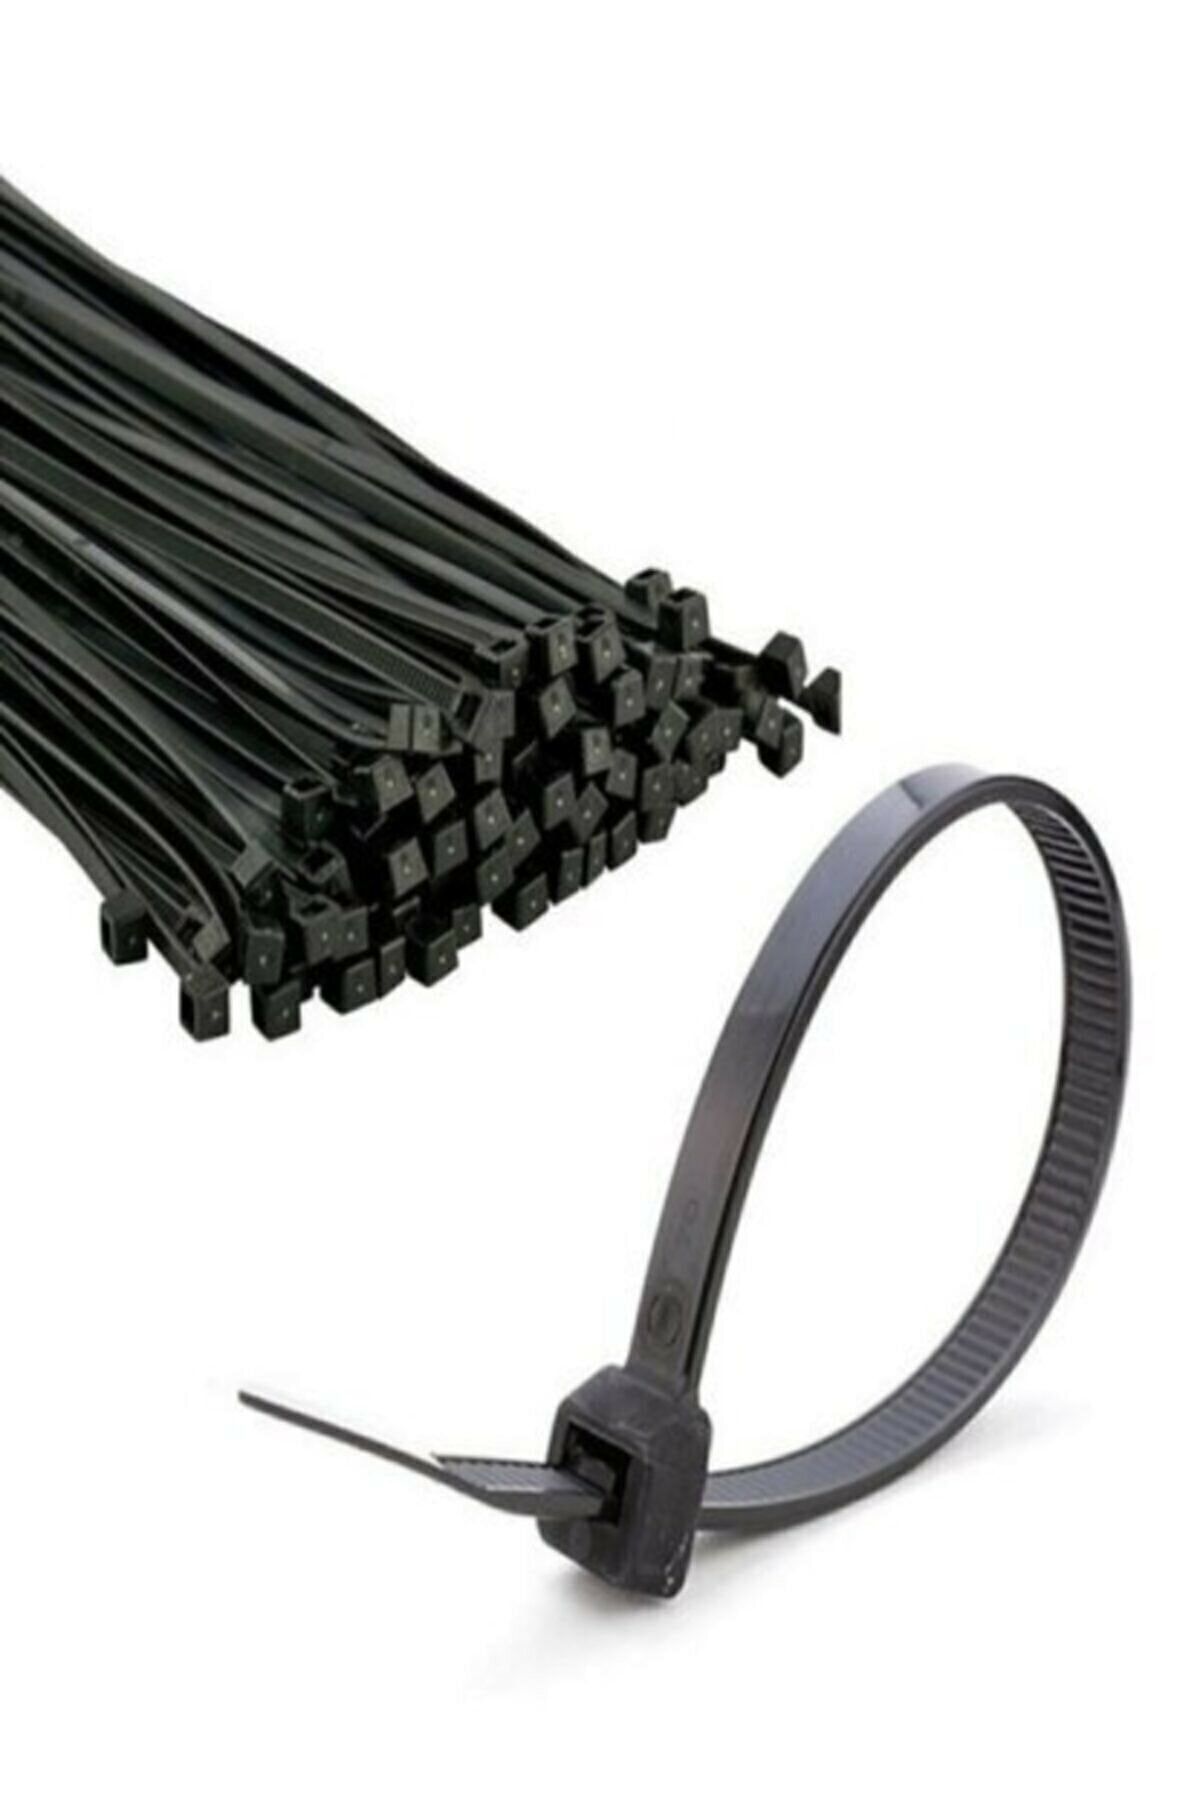 Zenith 100 Adet Siyah Plastik Kelepçe Cırt Kablo (3,6x200mm)